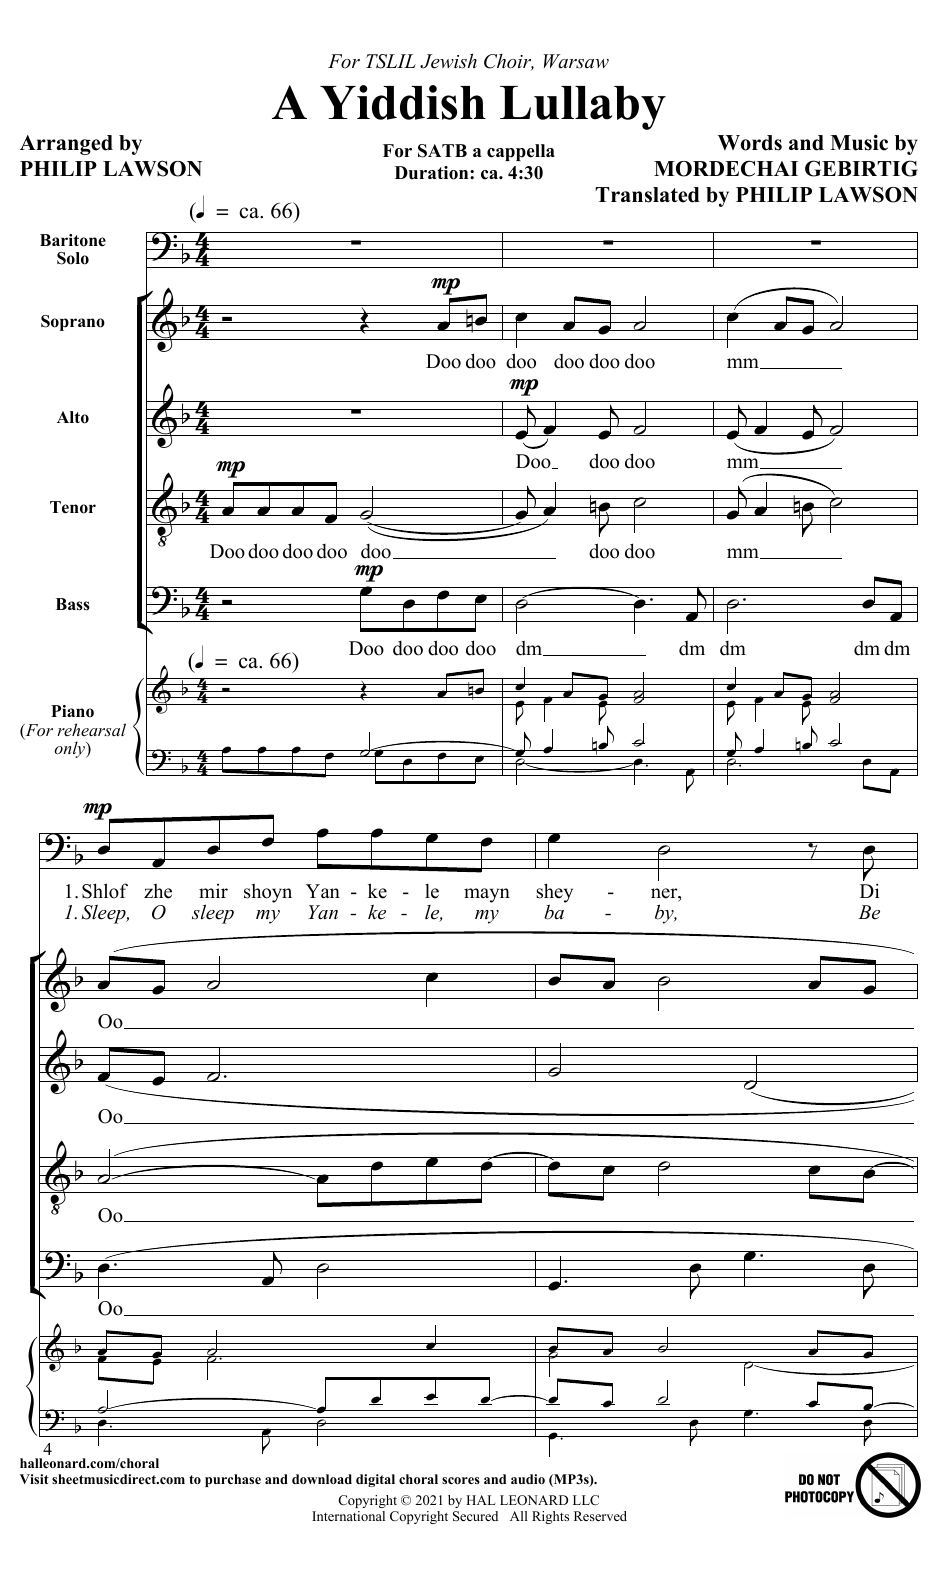 Mordechai Gebirtig A Yiddish Lullaby (arr. Philip Lawson) Sheet Music Notes & Chords for SATB Choir - Download or Print PDF